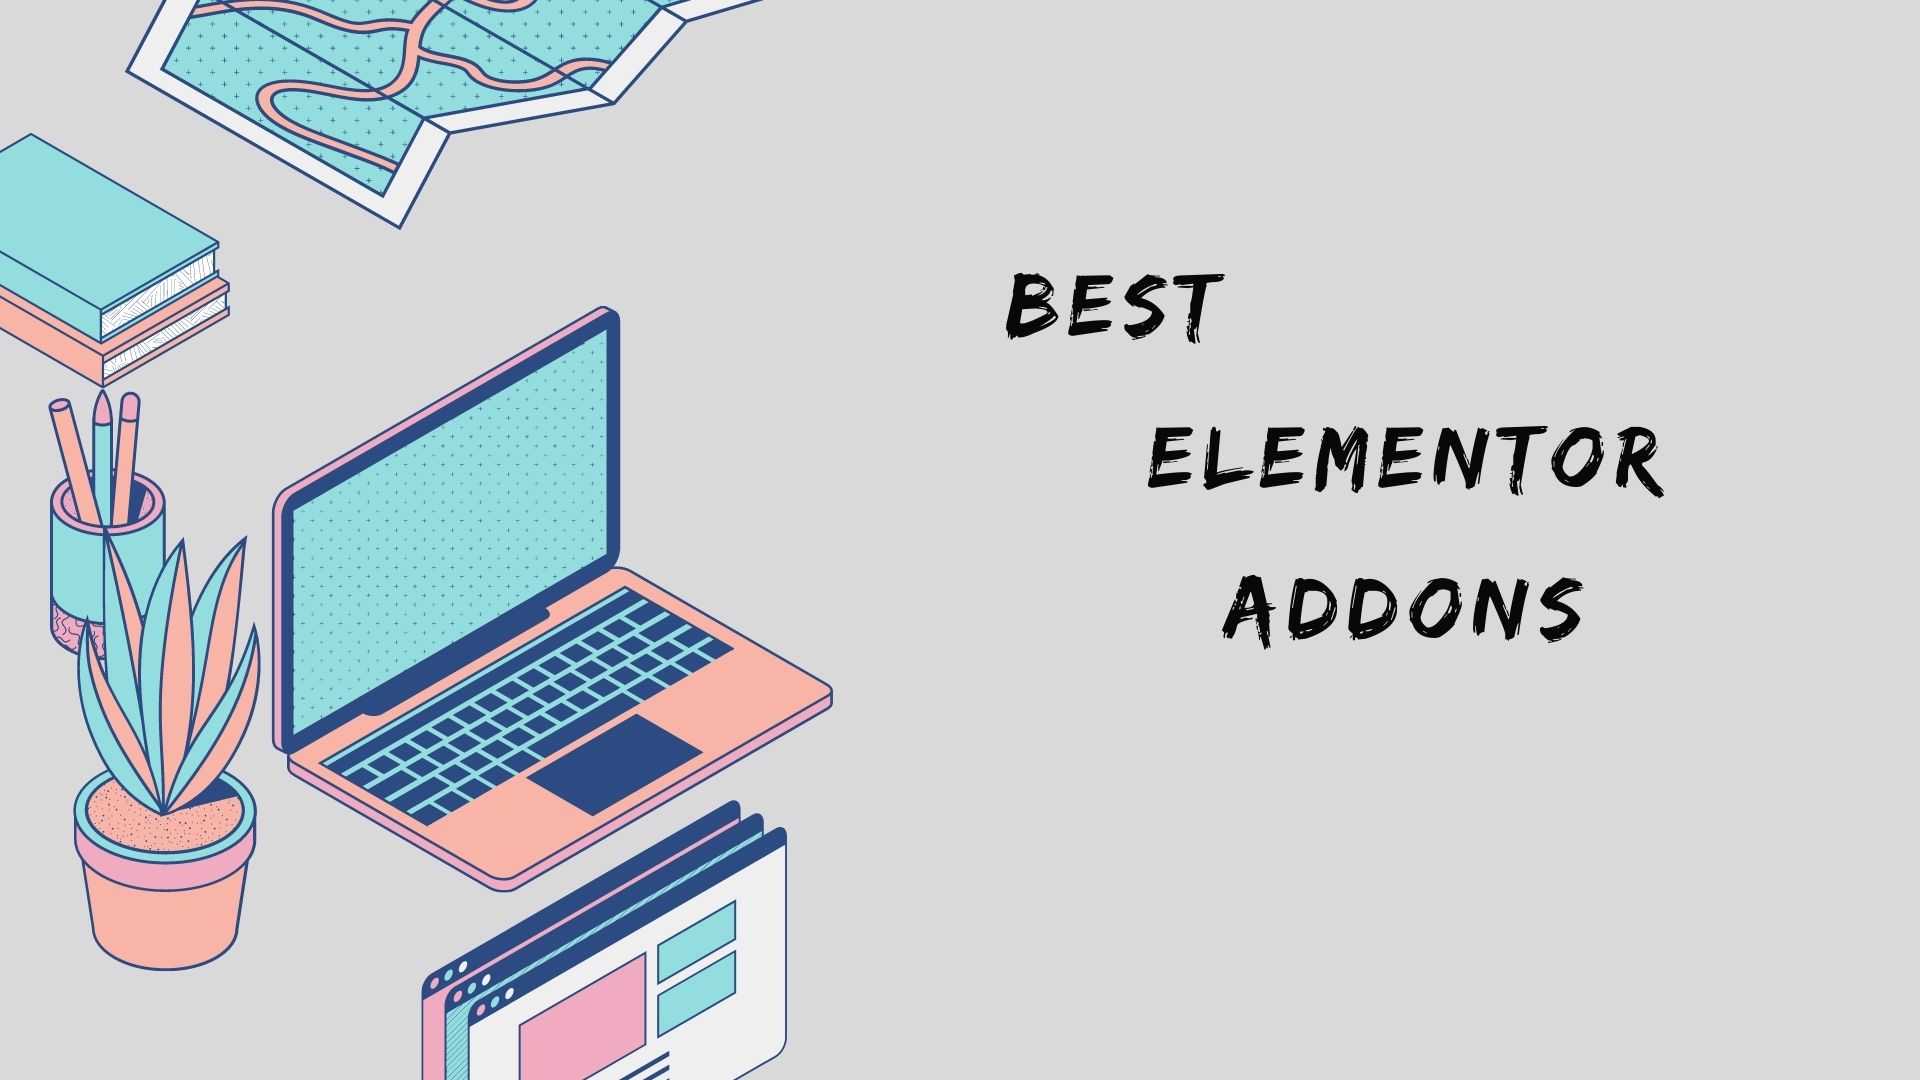 Best Elementor Addons for WordPress 2021.